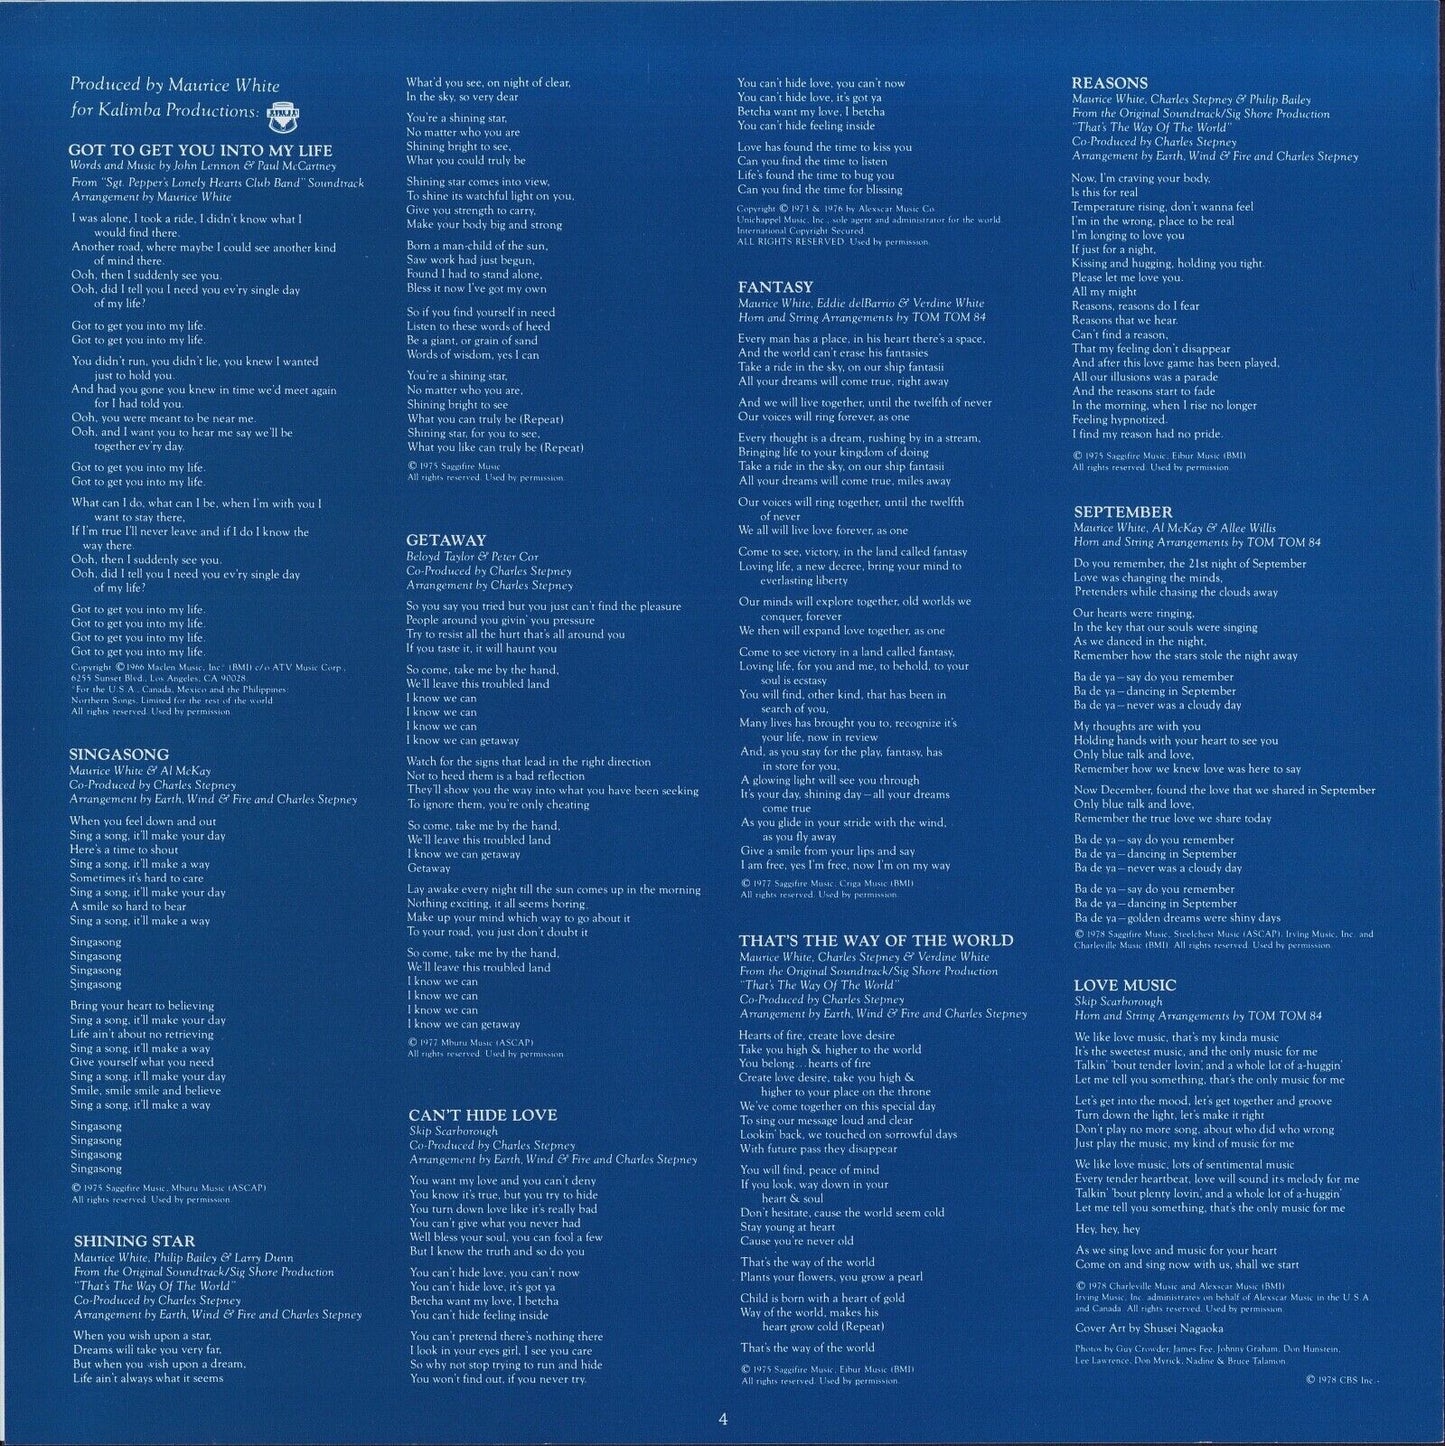 Earth, Wind & Fire ‎- The Best Of Earth, Wind & Fire Vol. I Vinyl LP Halfspeed Mastering